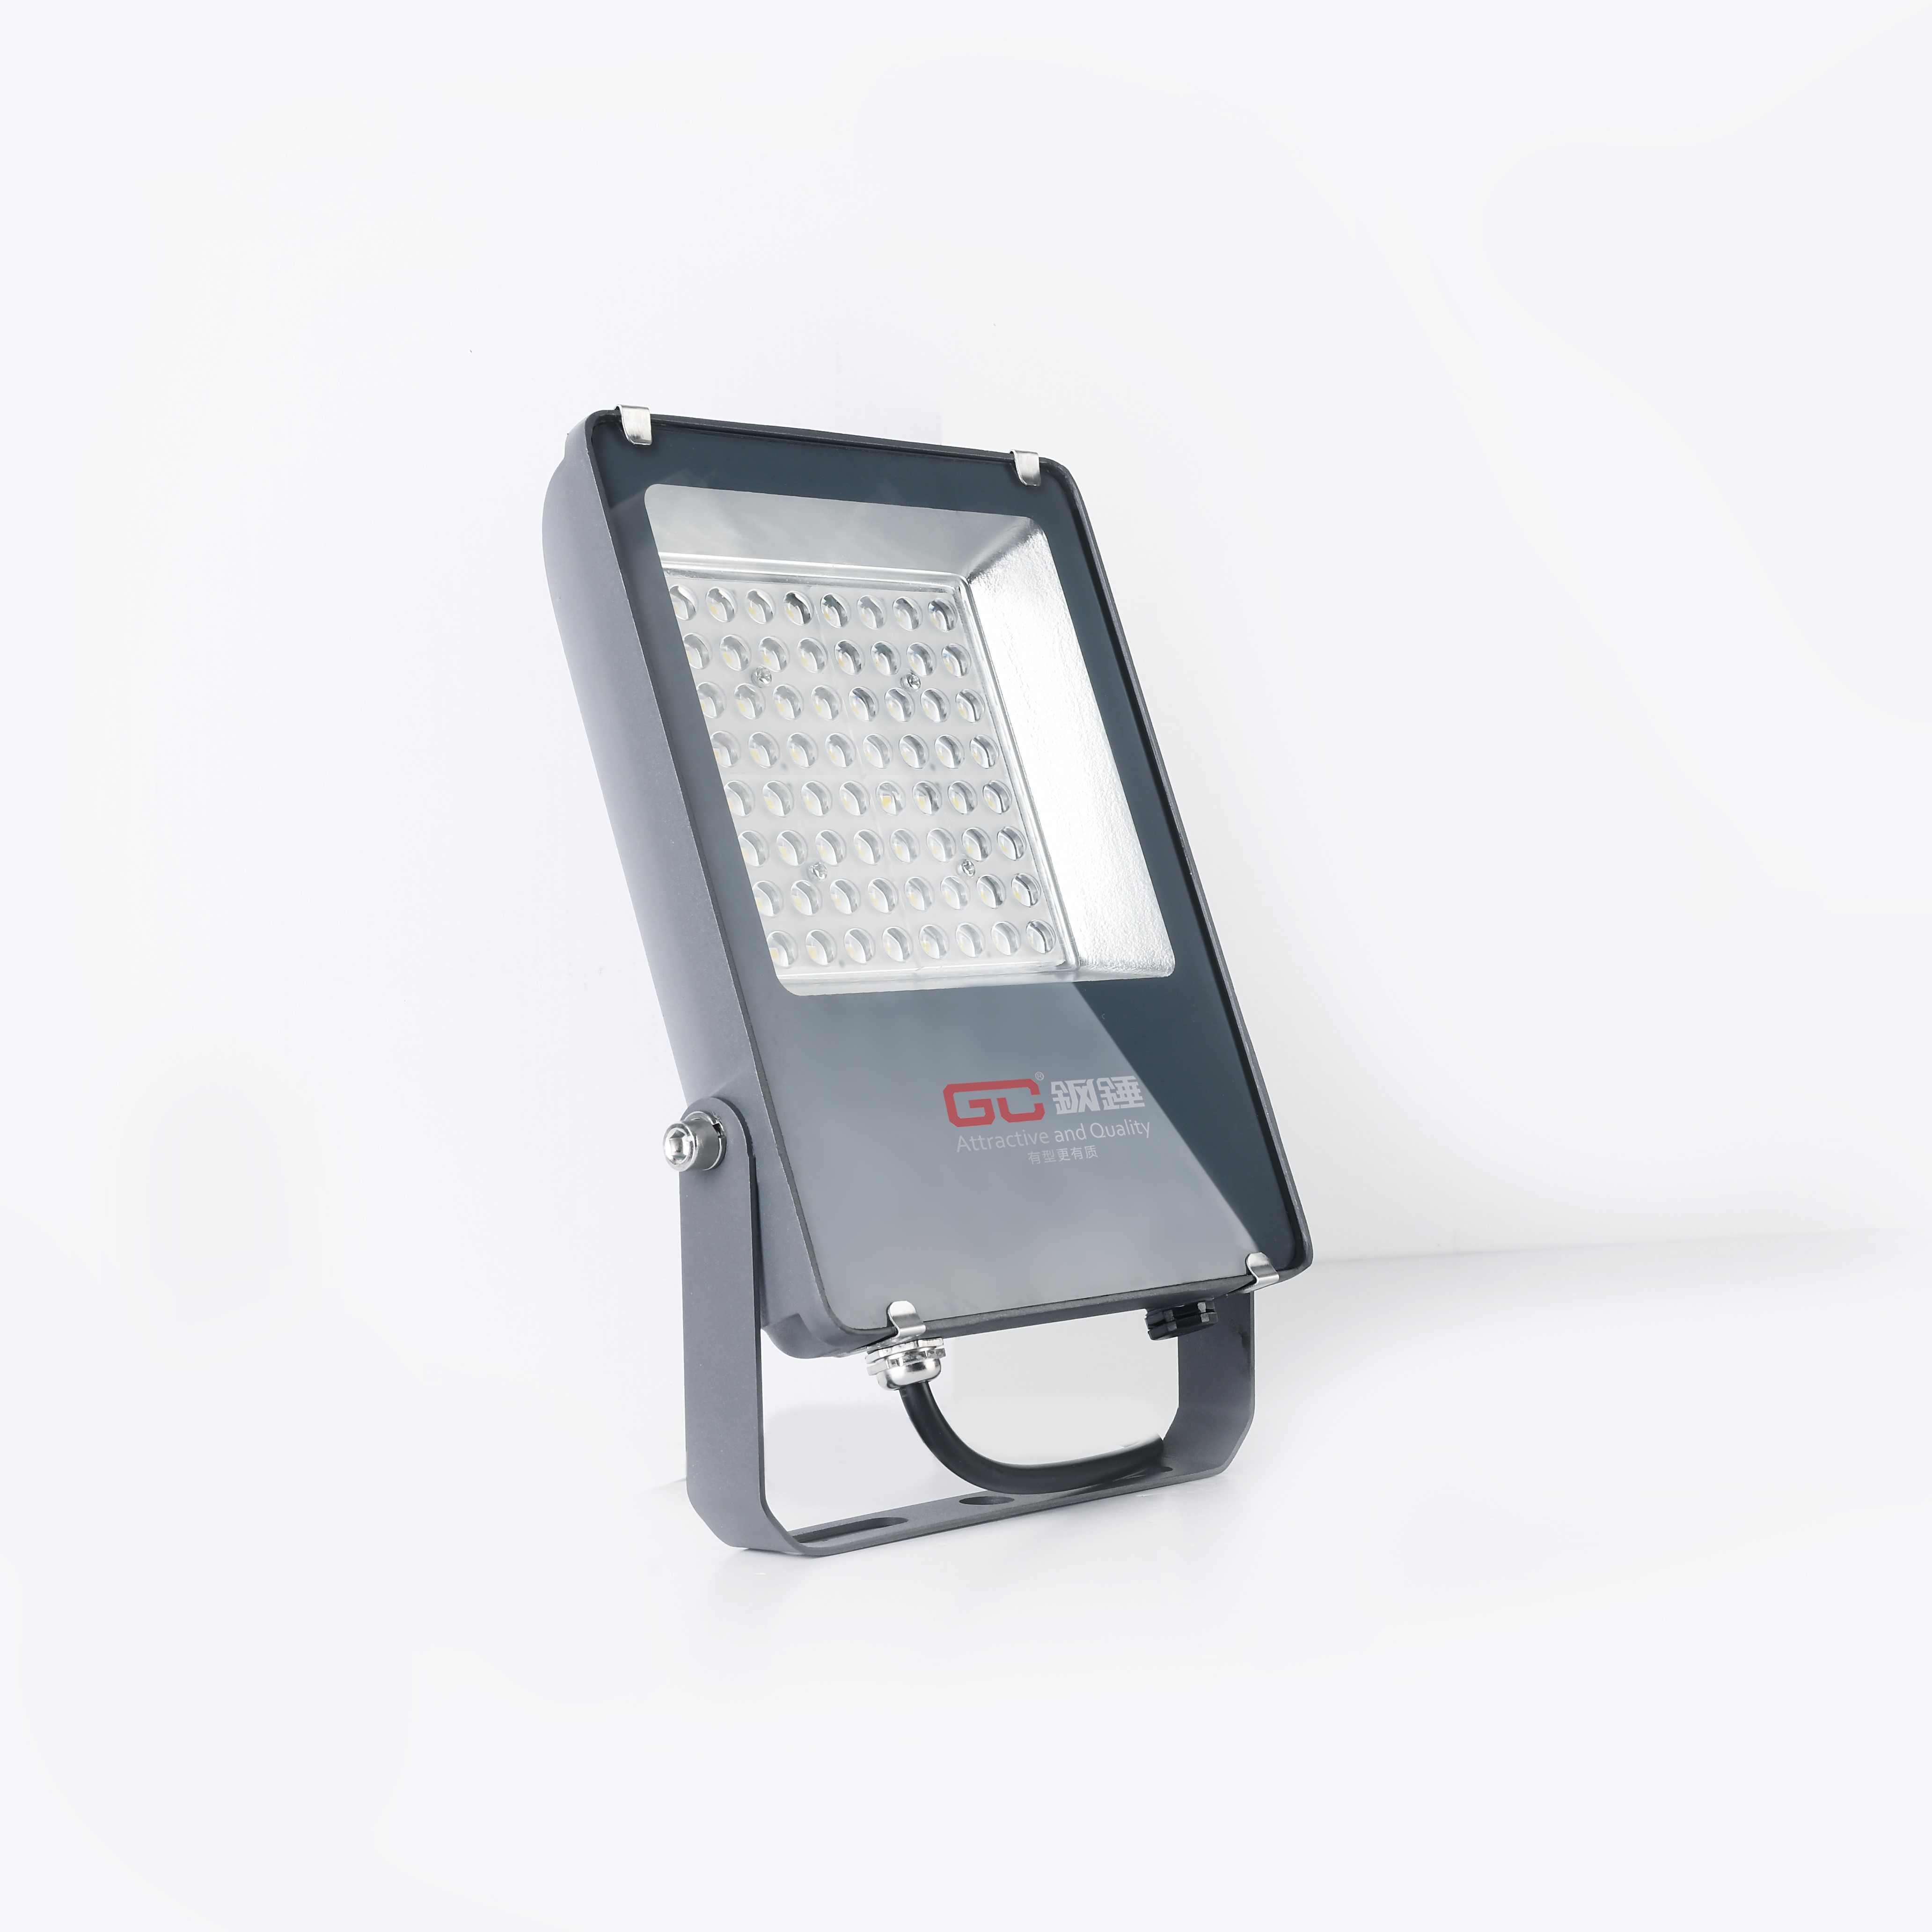 LED outdoor ultra-bright waterproof flood light